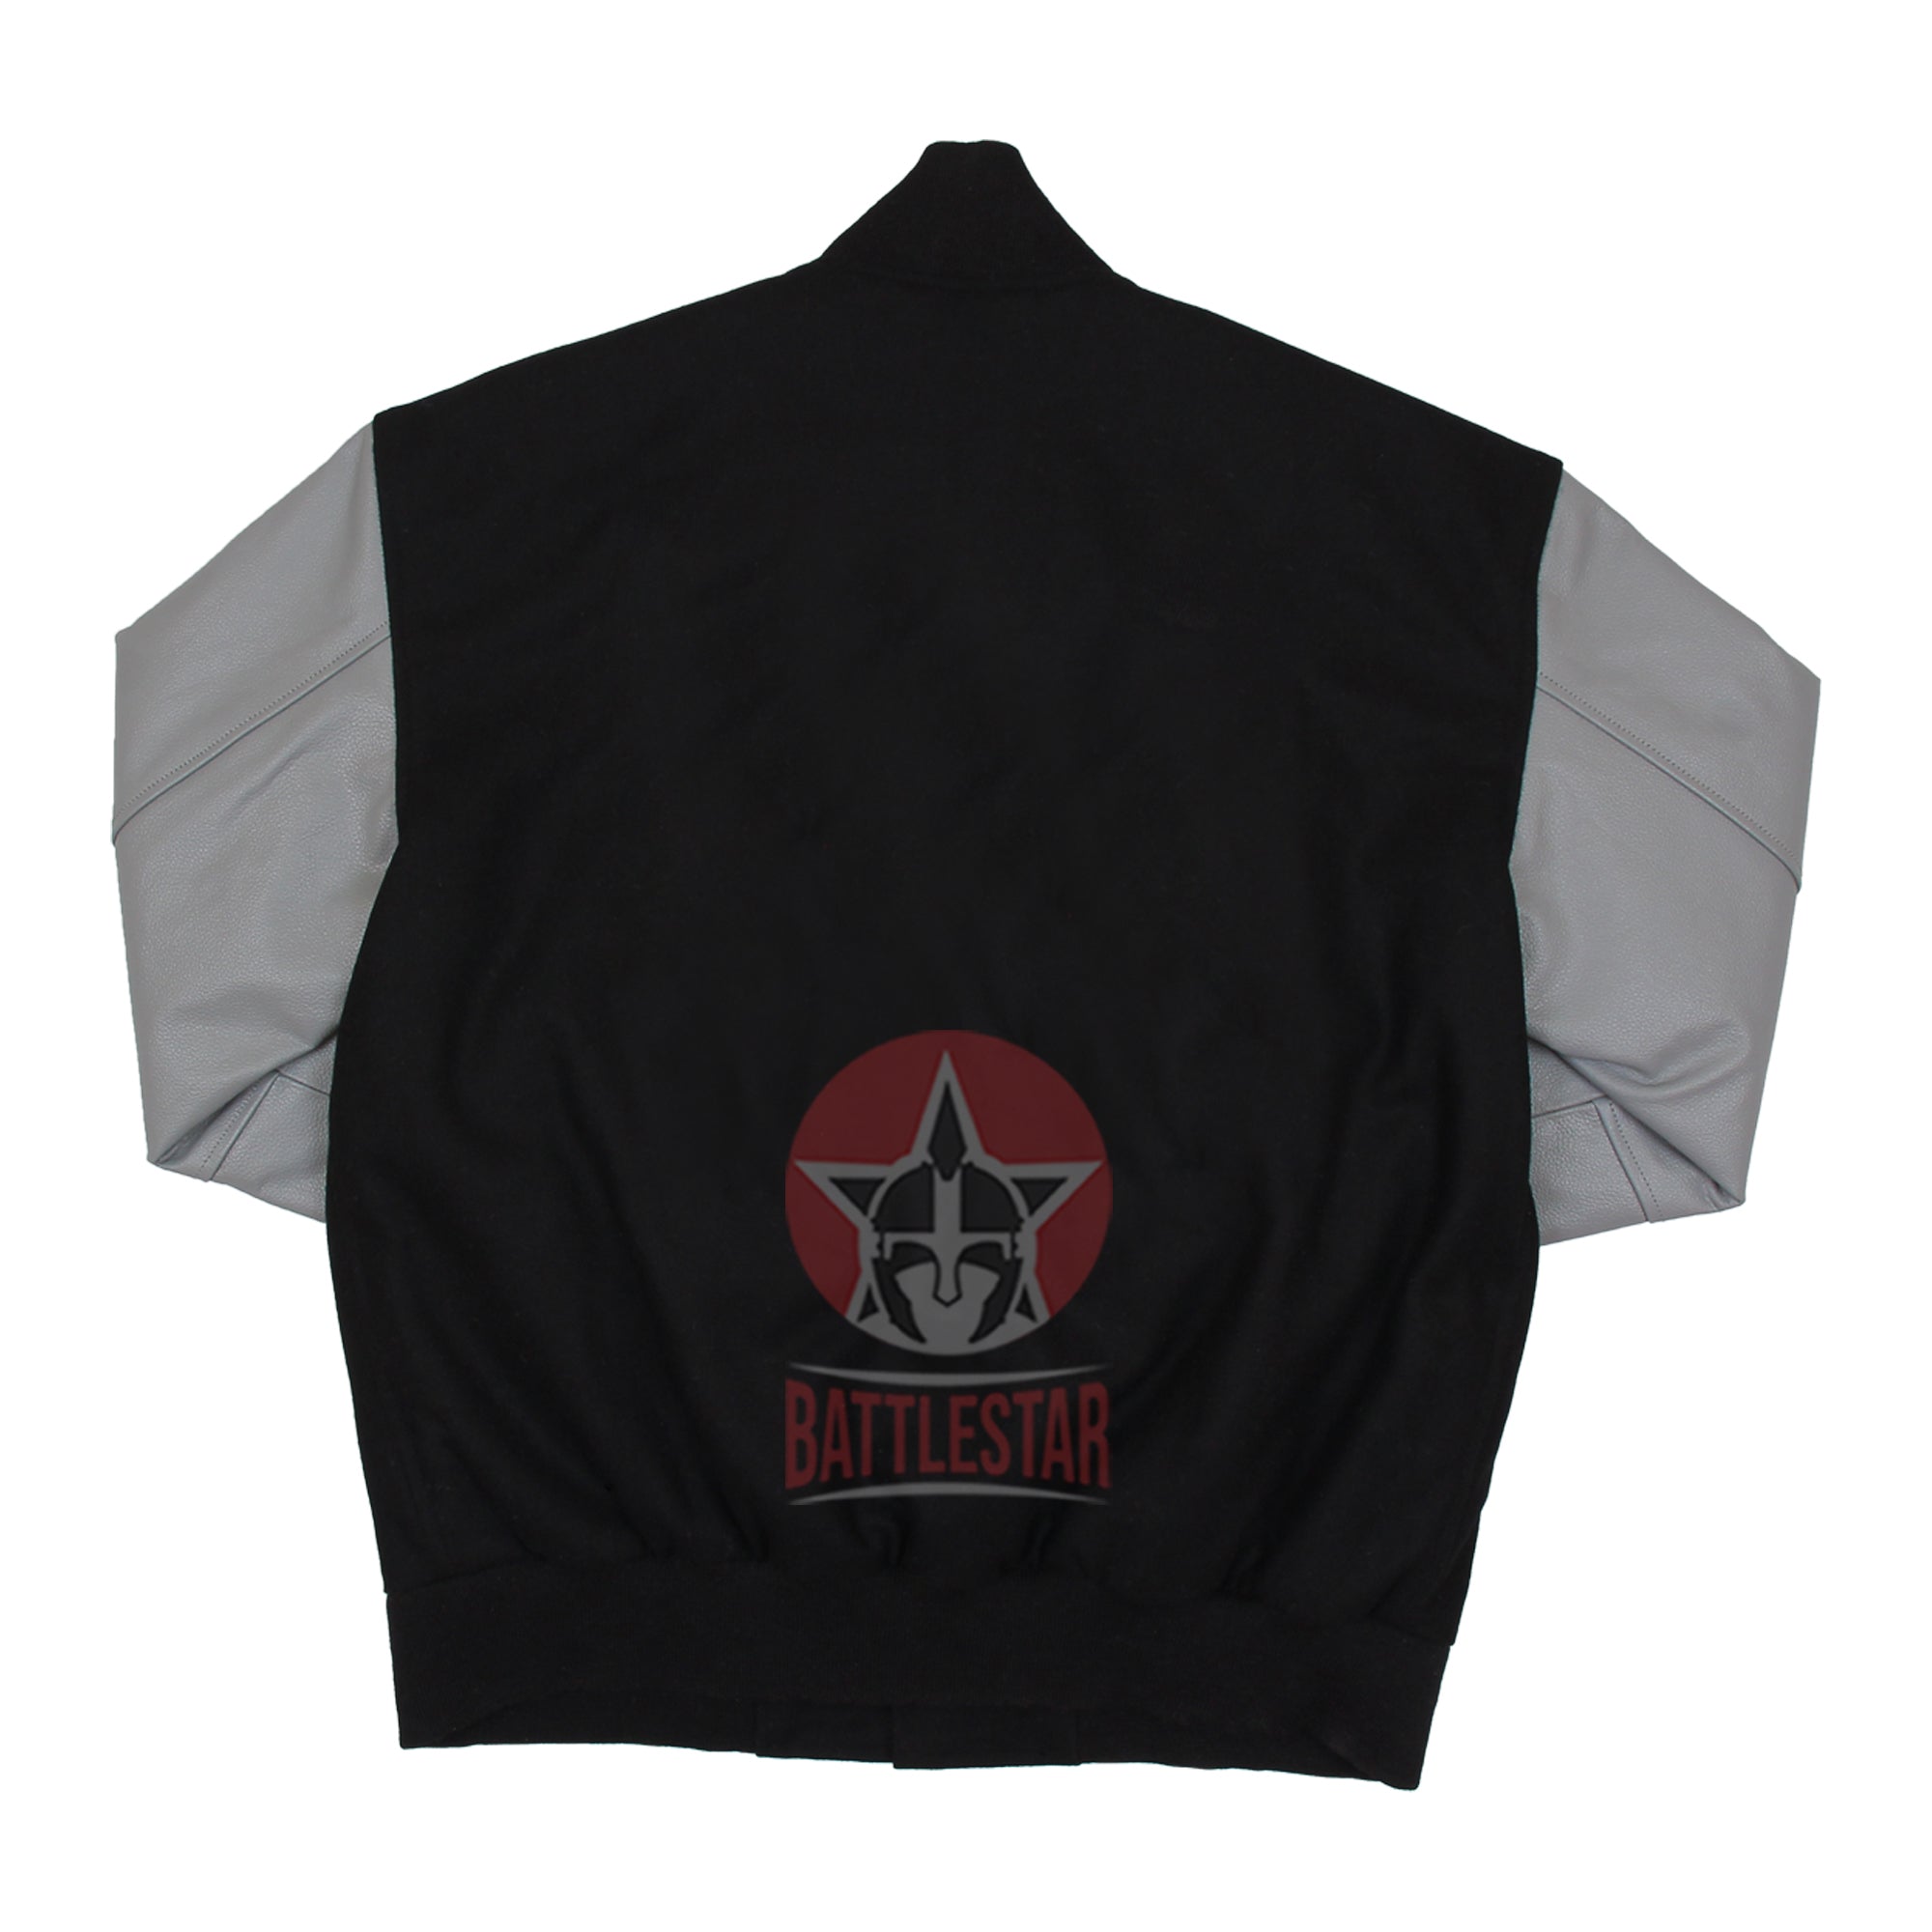 Black Wool Gray Leather Varsity Baseball Letterman Jacket